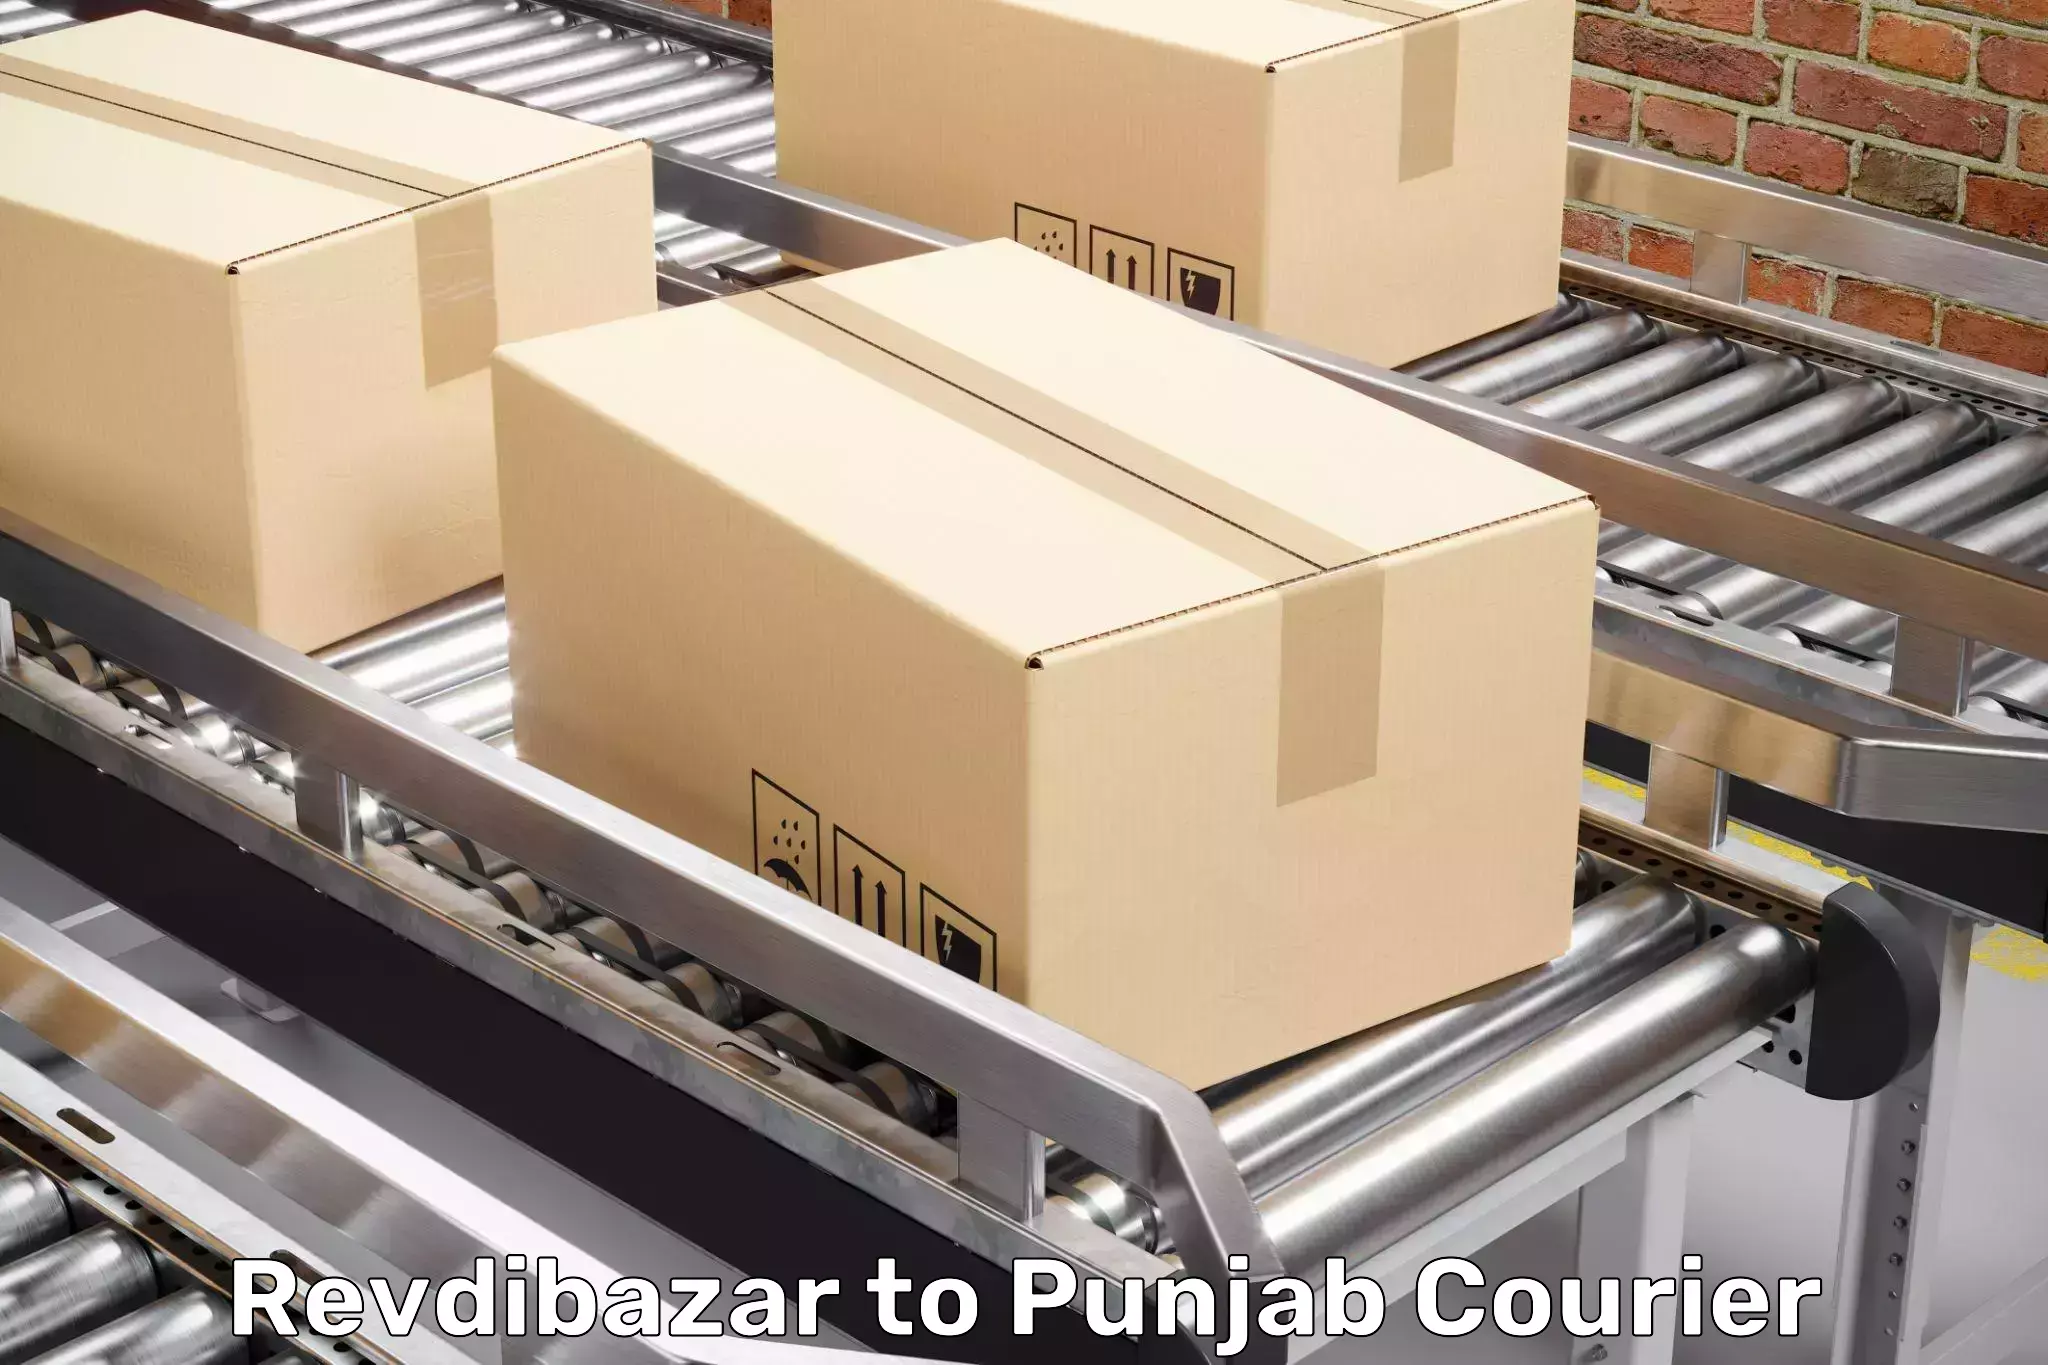 Specialized moving company Revdibazar to Central University of Punjab Bathinda